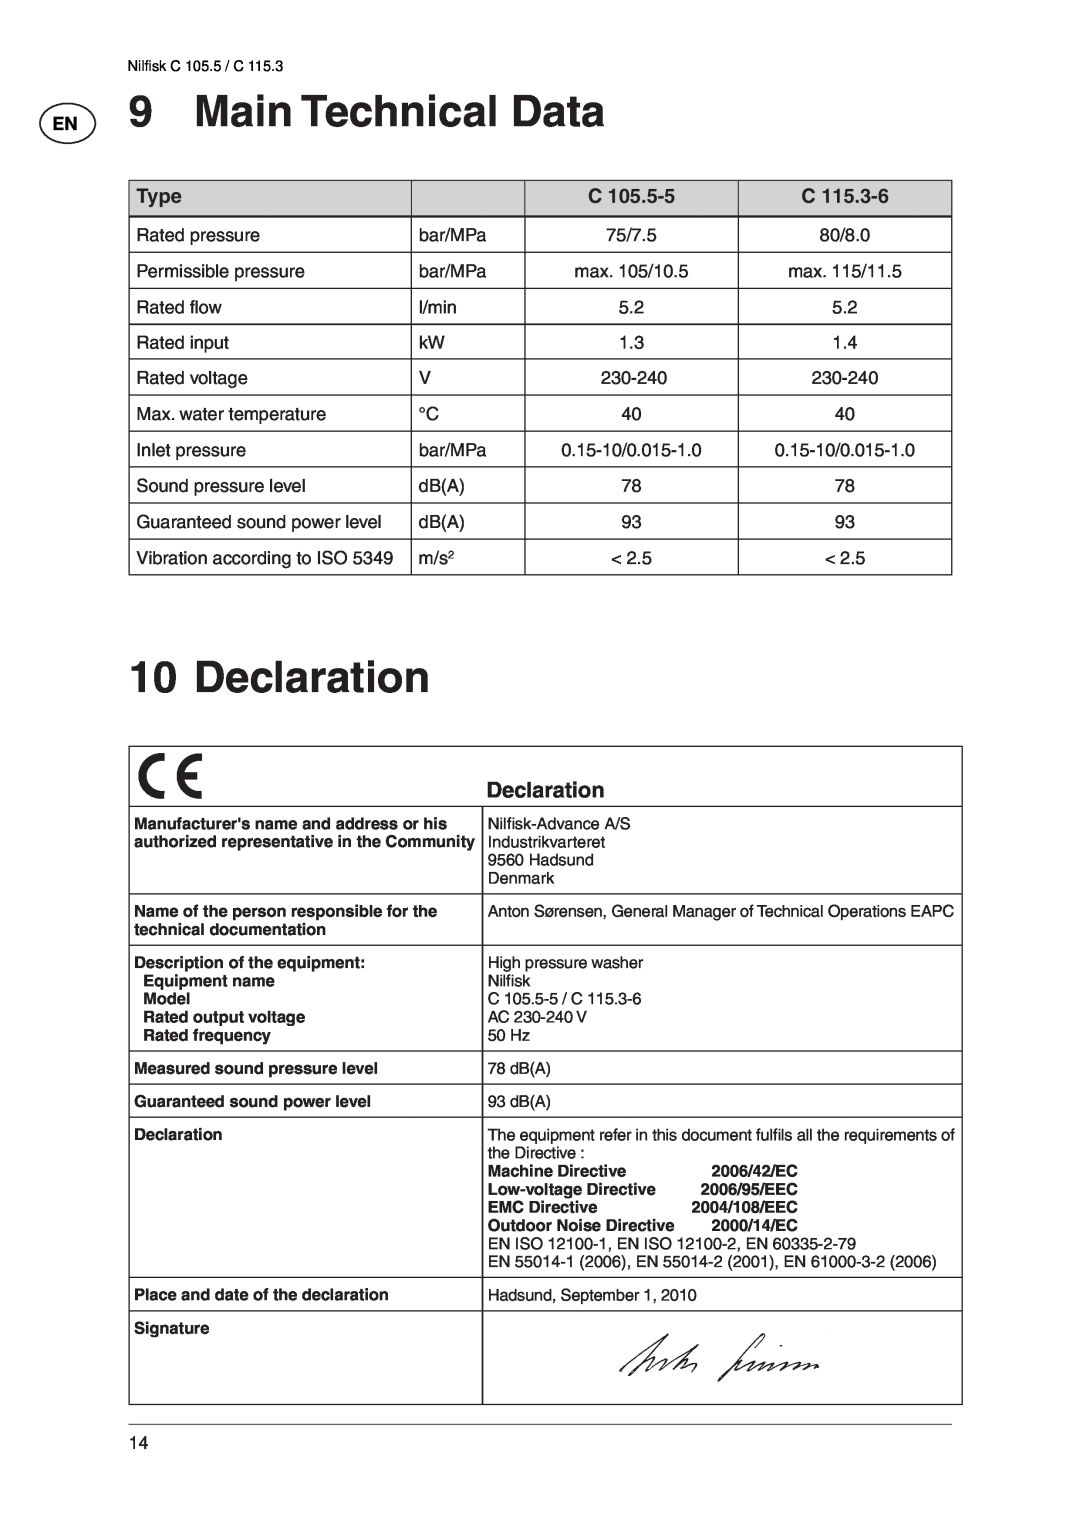 Nilfisk-ALTO C 115.3, C 105.5 user manual Main Technical Data, Declaration, Type 